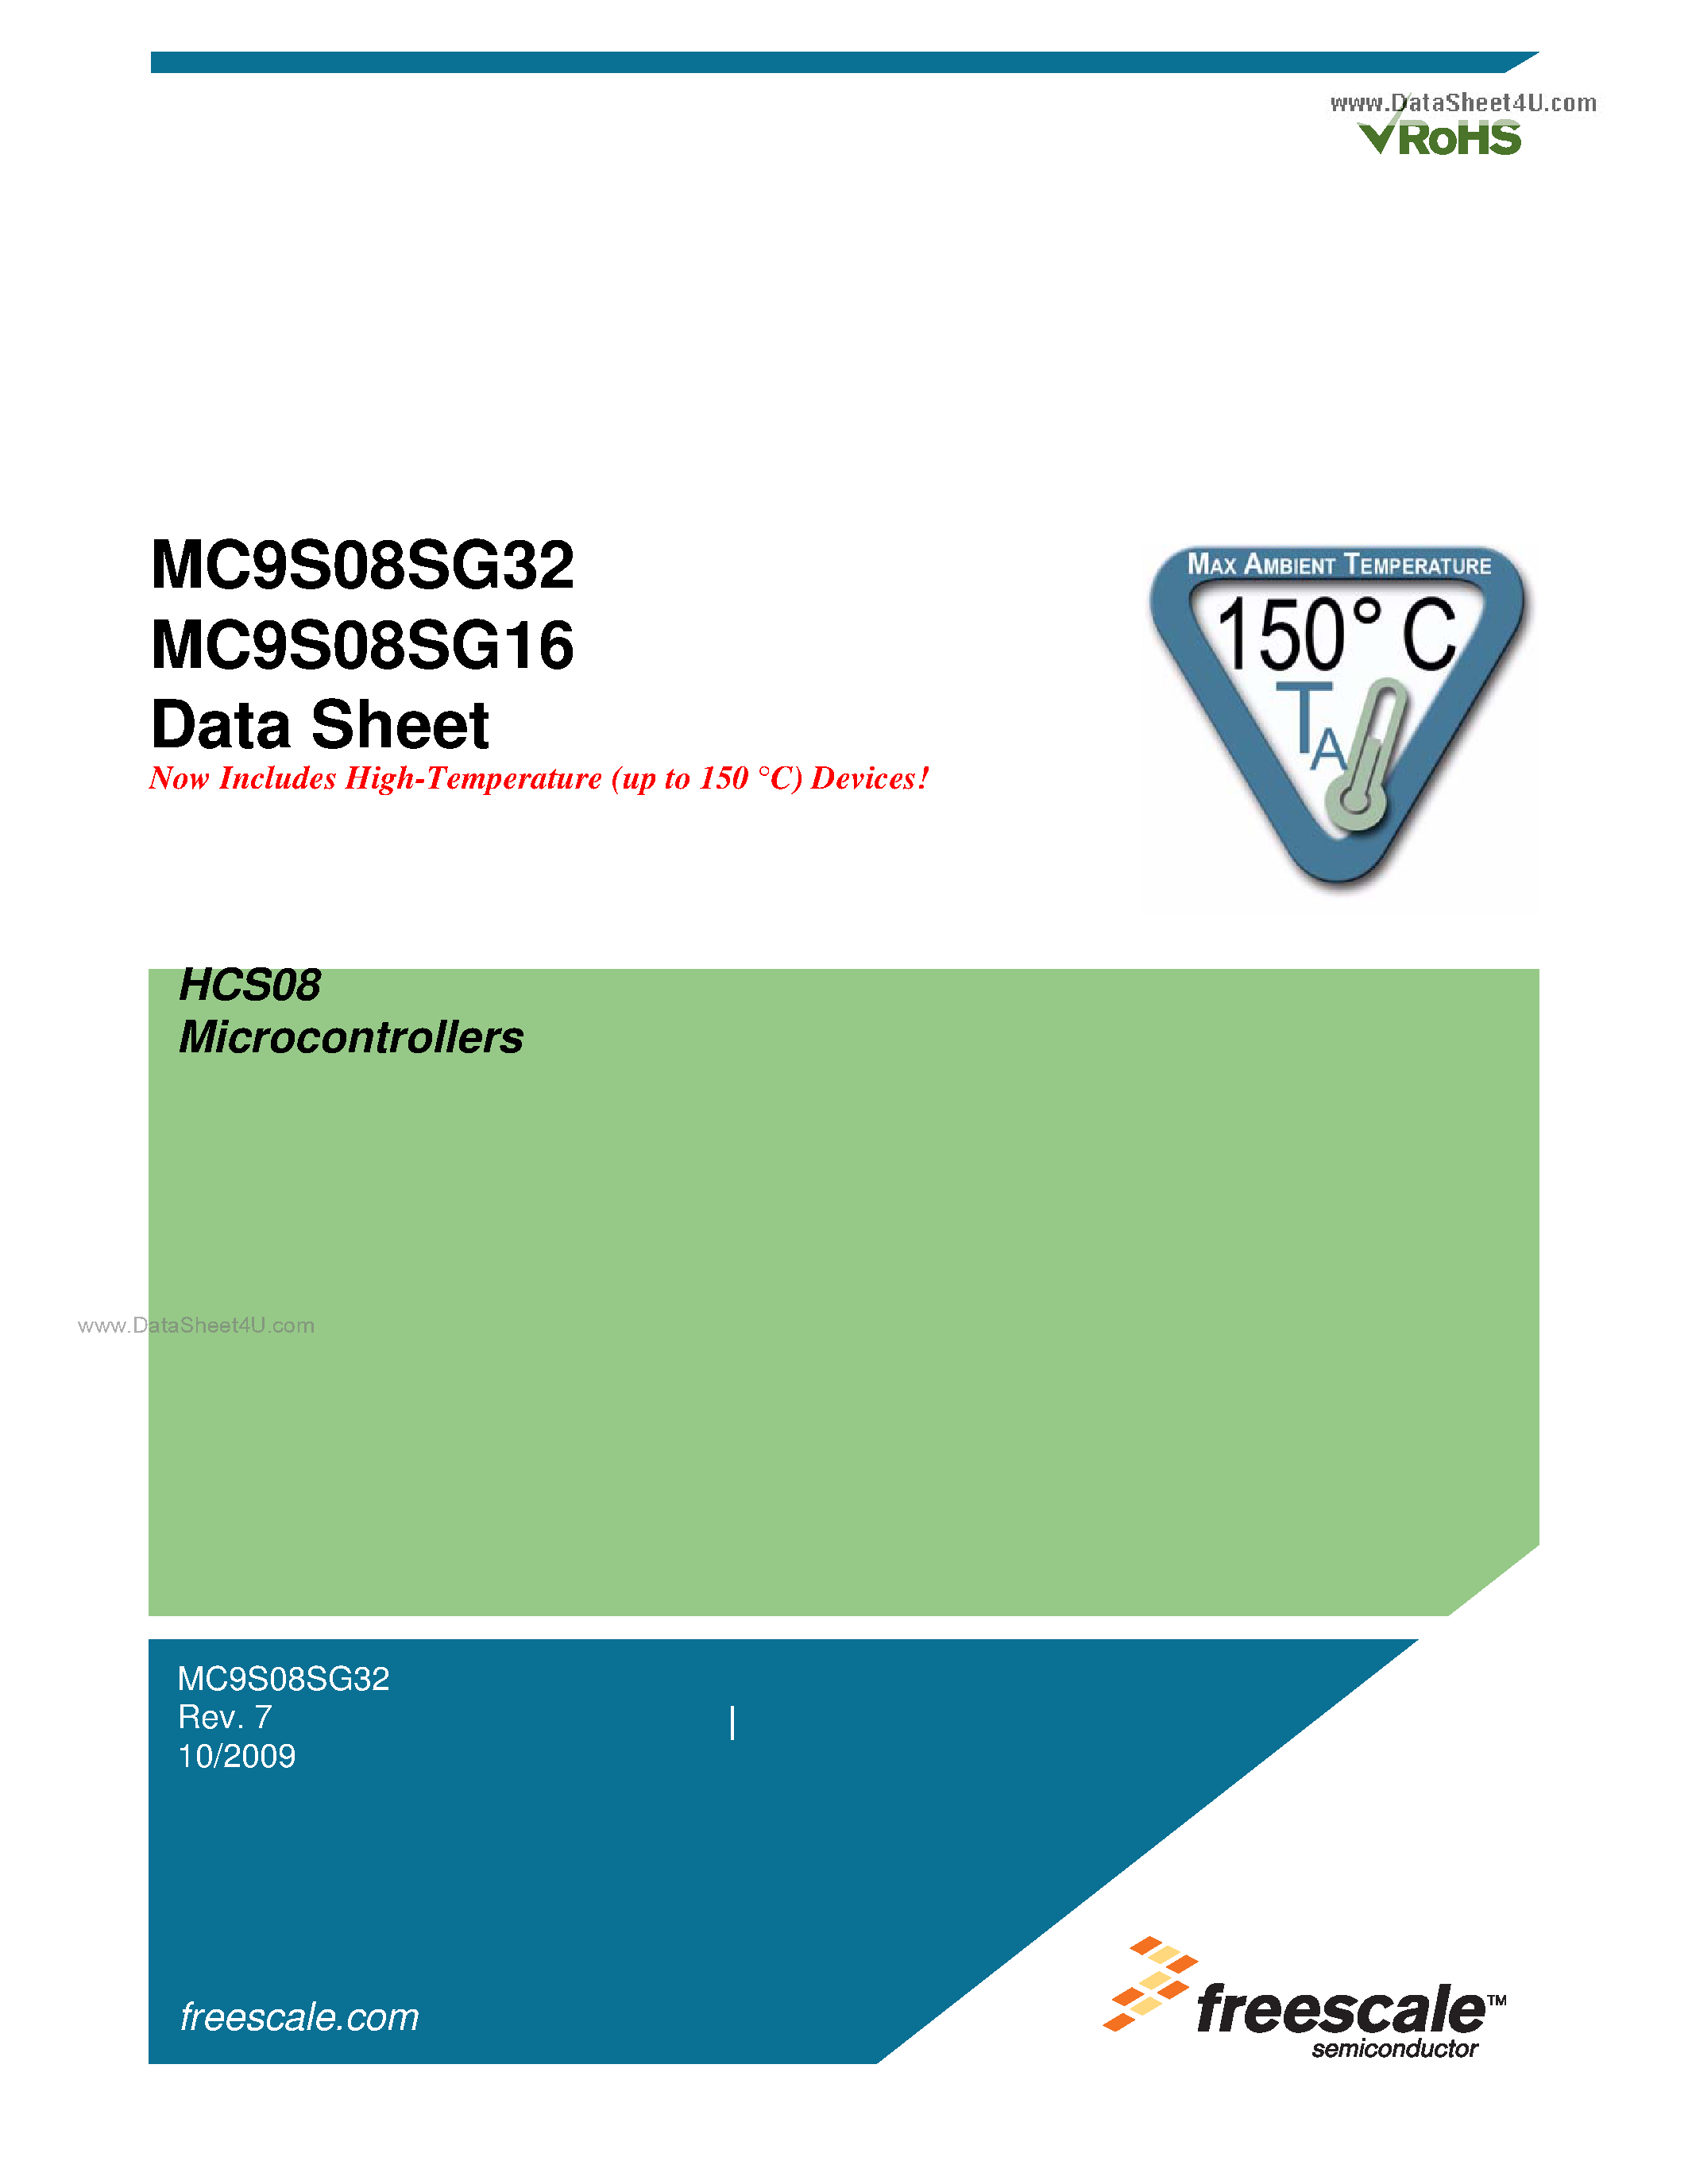 Даташит MC9S08SG16 - (MC9S08SG16 / MC9S08SG32) HCS08 Microcontrollers страница 1